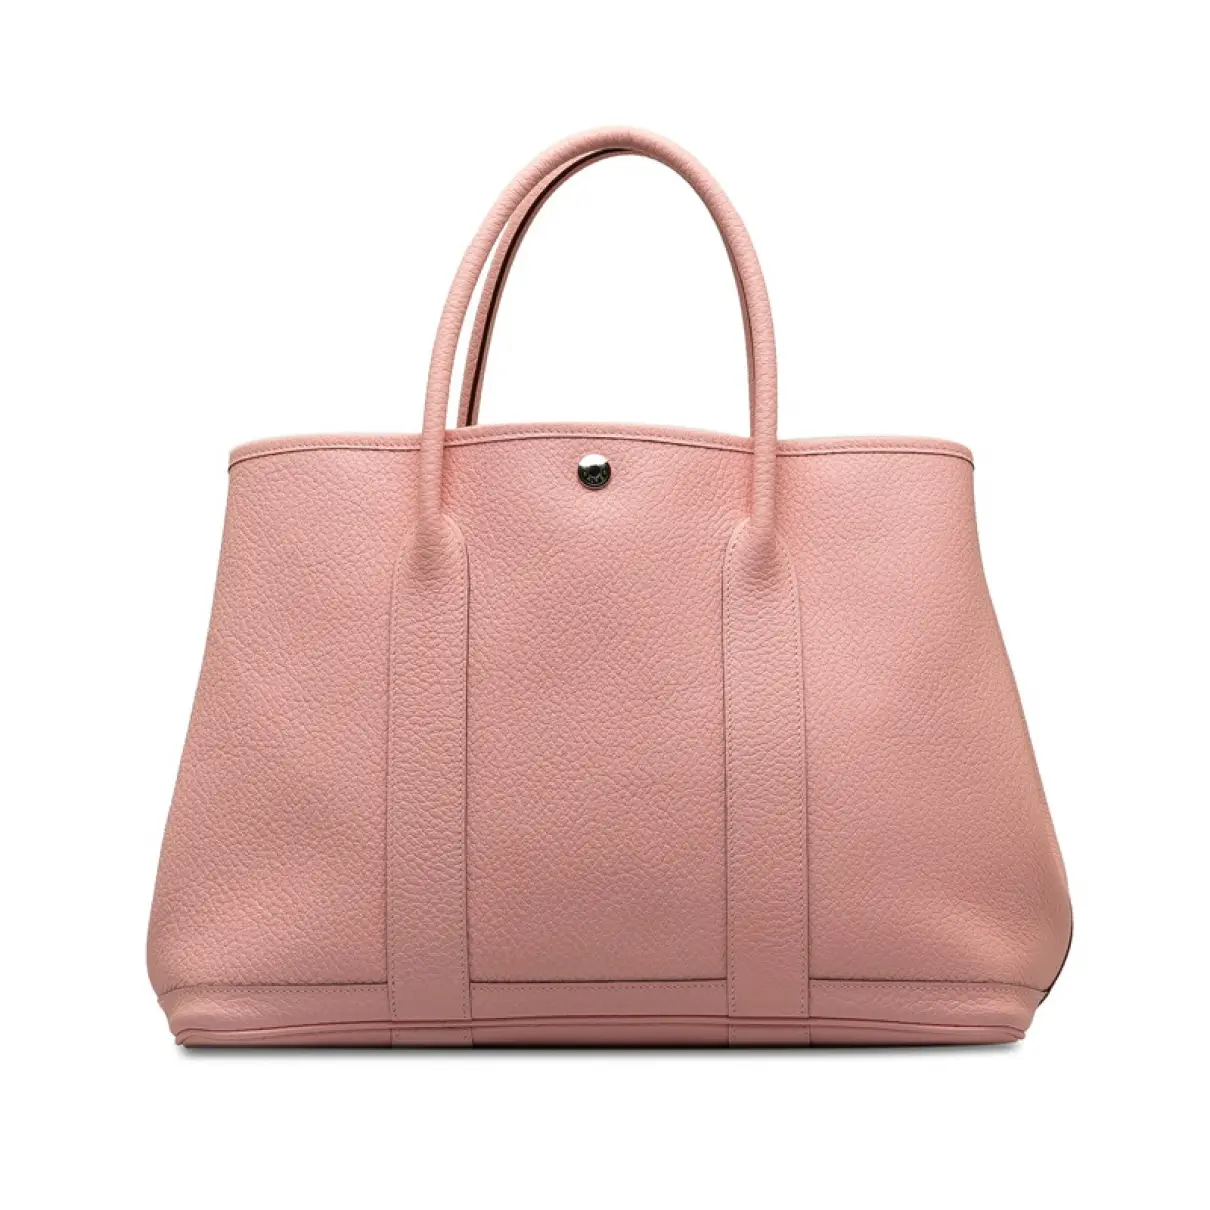 Luxury Hermès Handbags Women